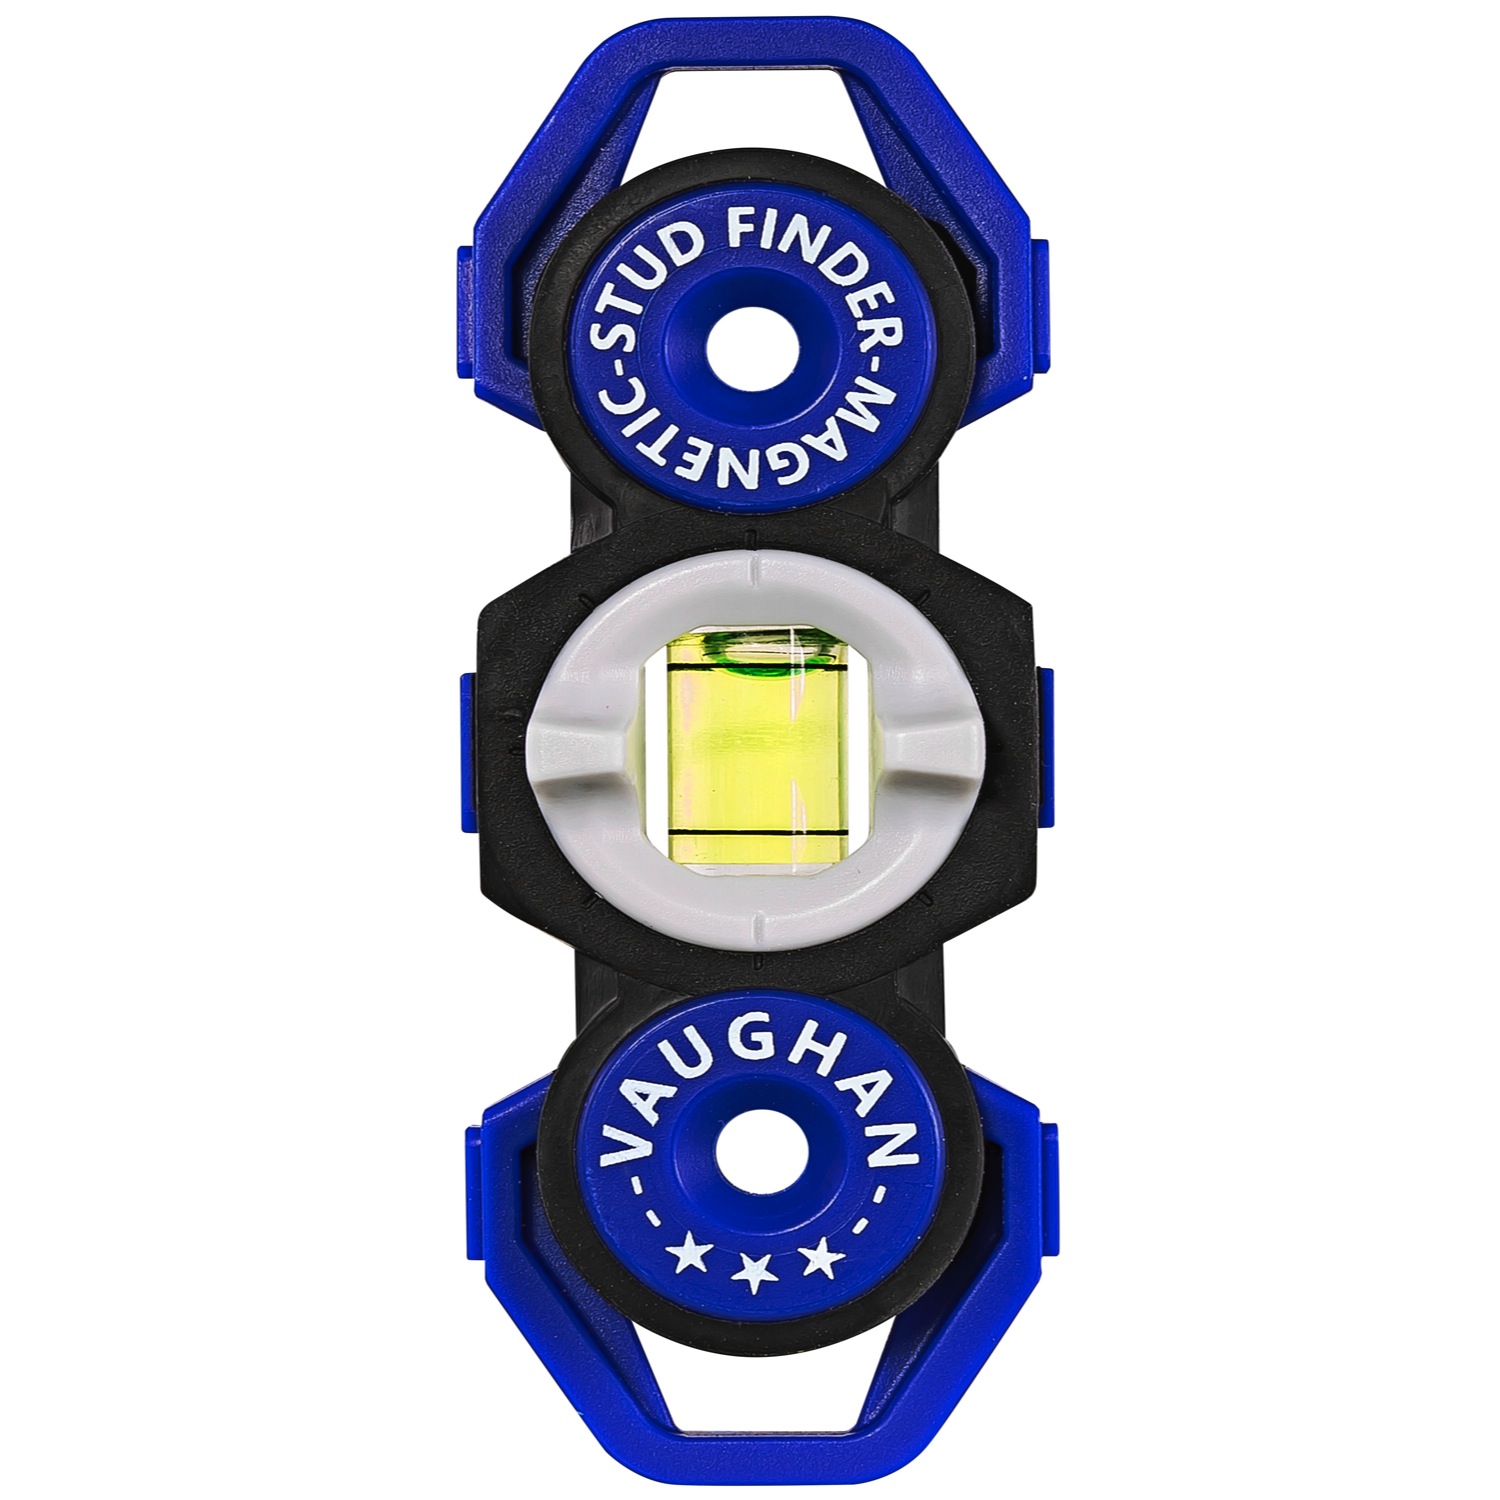 Vaughan Pocket Sized Magnetic Stud Finder and Level - 050044